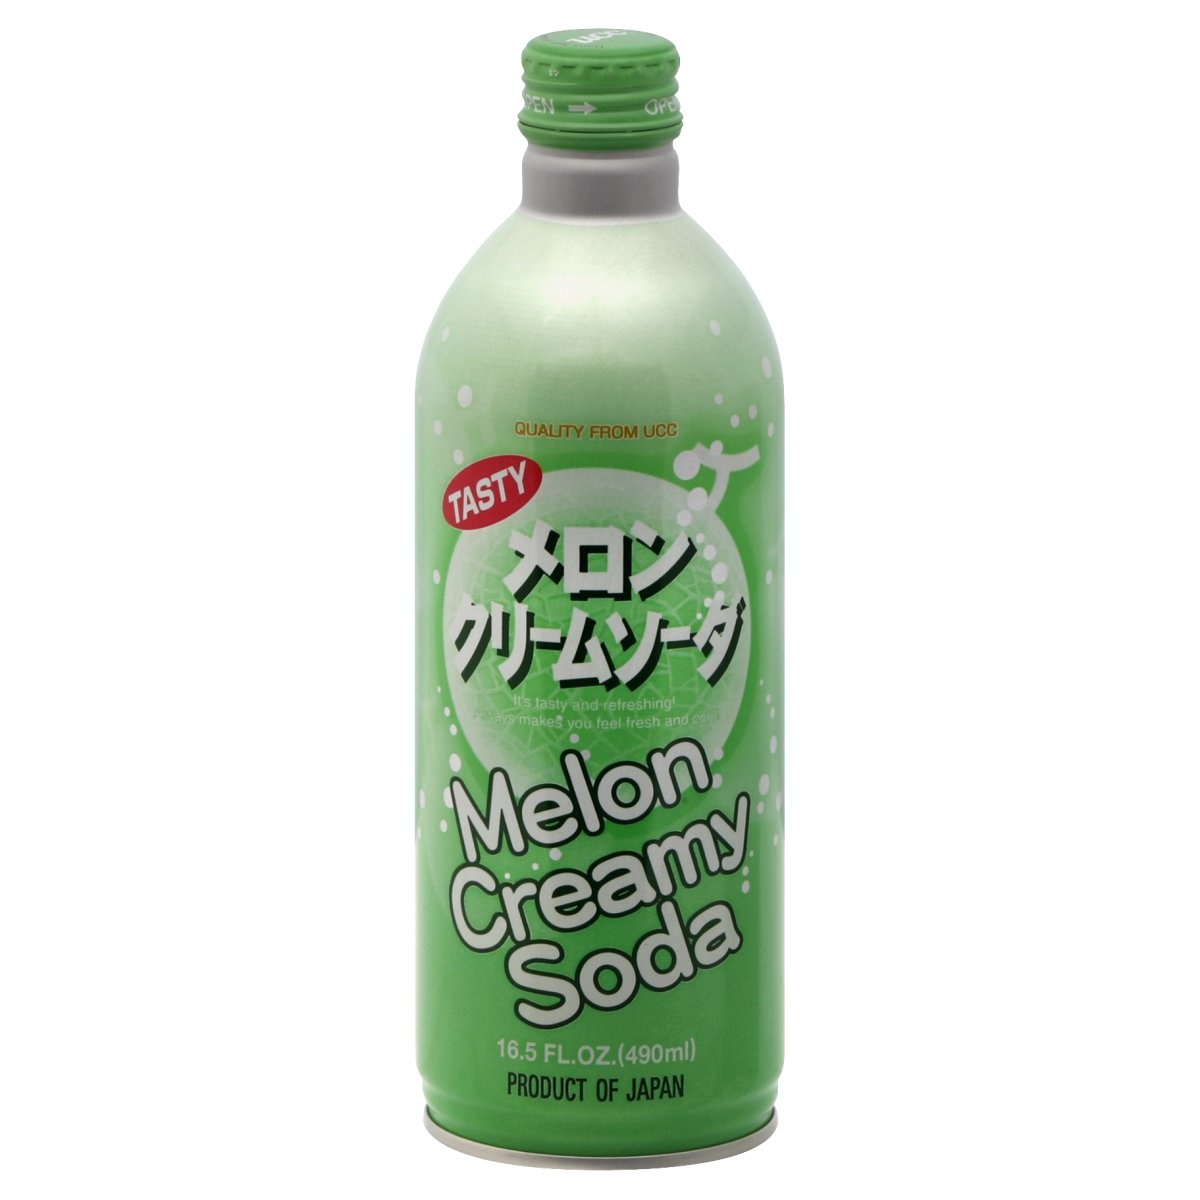 slide 1 of 4, Ucc Melon Creamy Soda - 16.5 oz, 16.5 oz